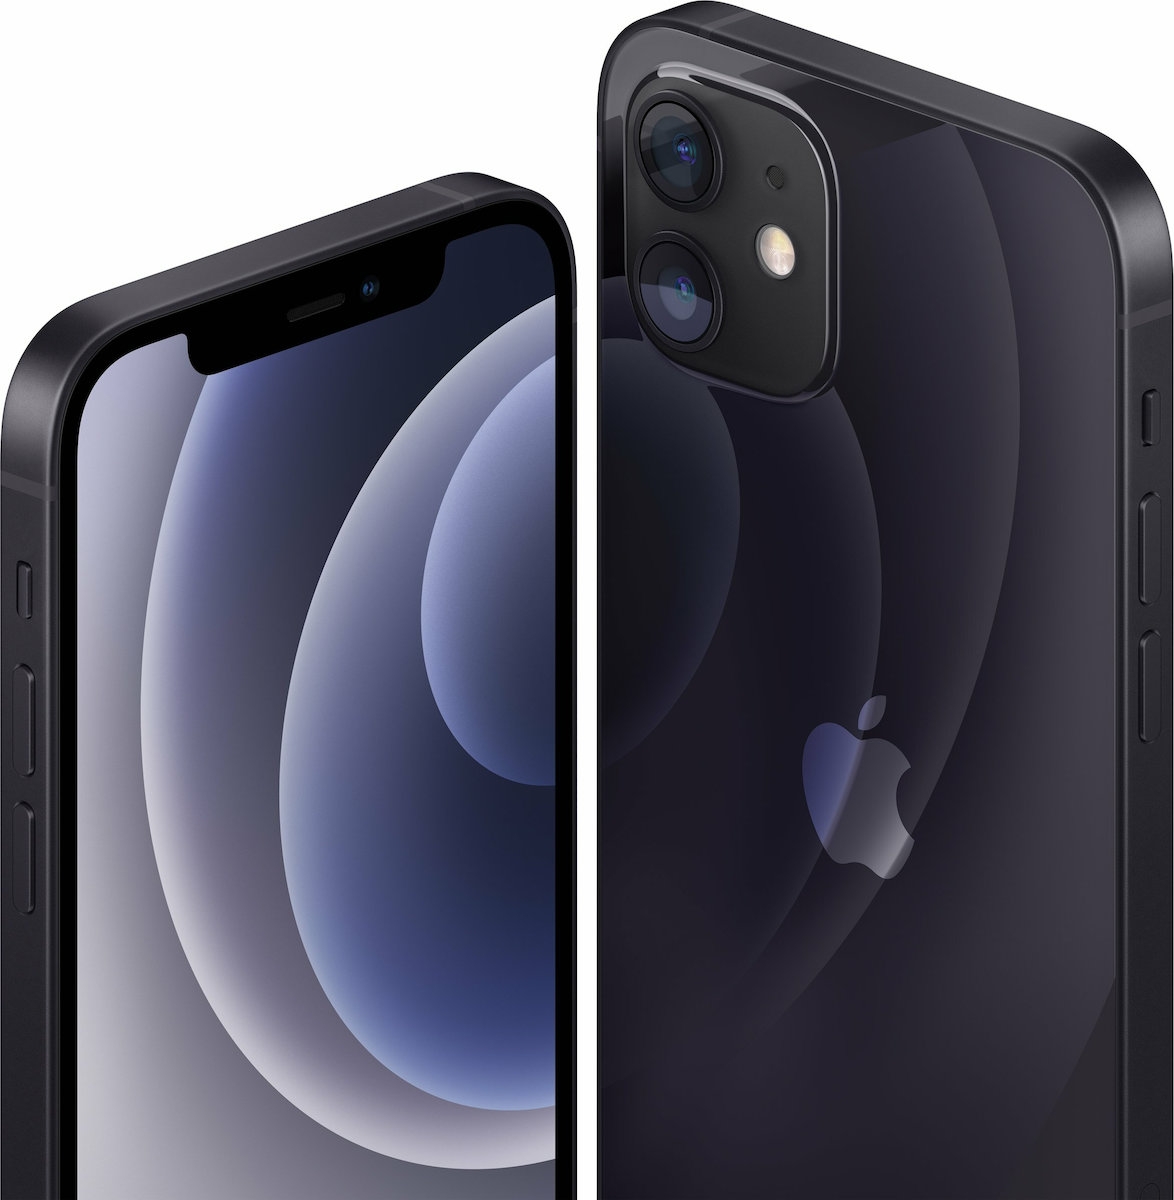 apple-iphone-12-64gb-black